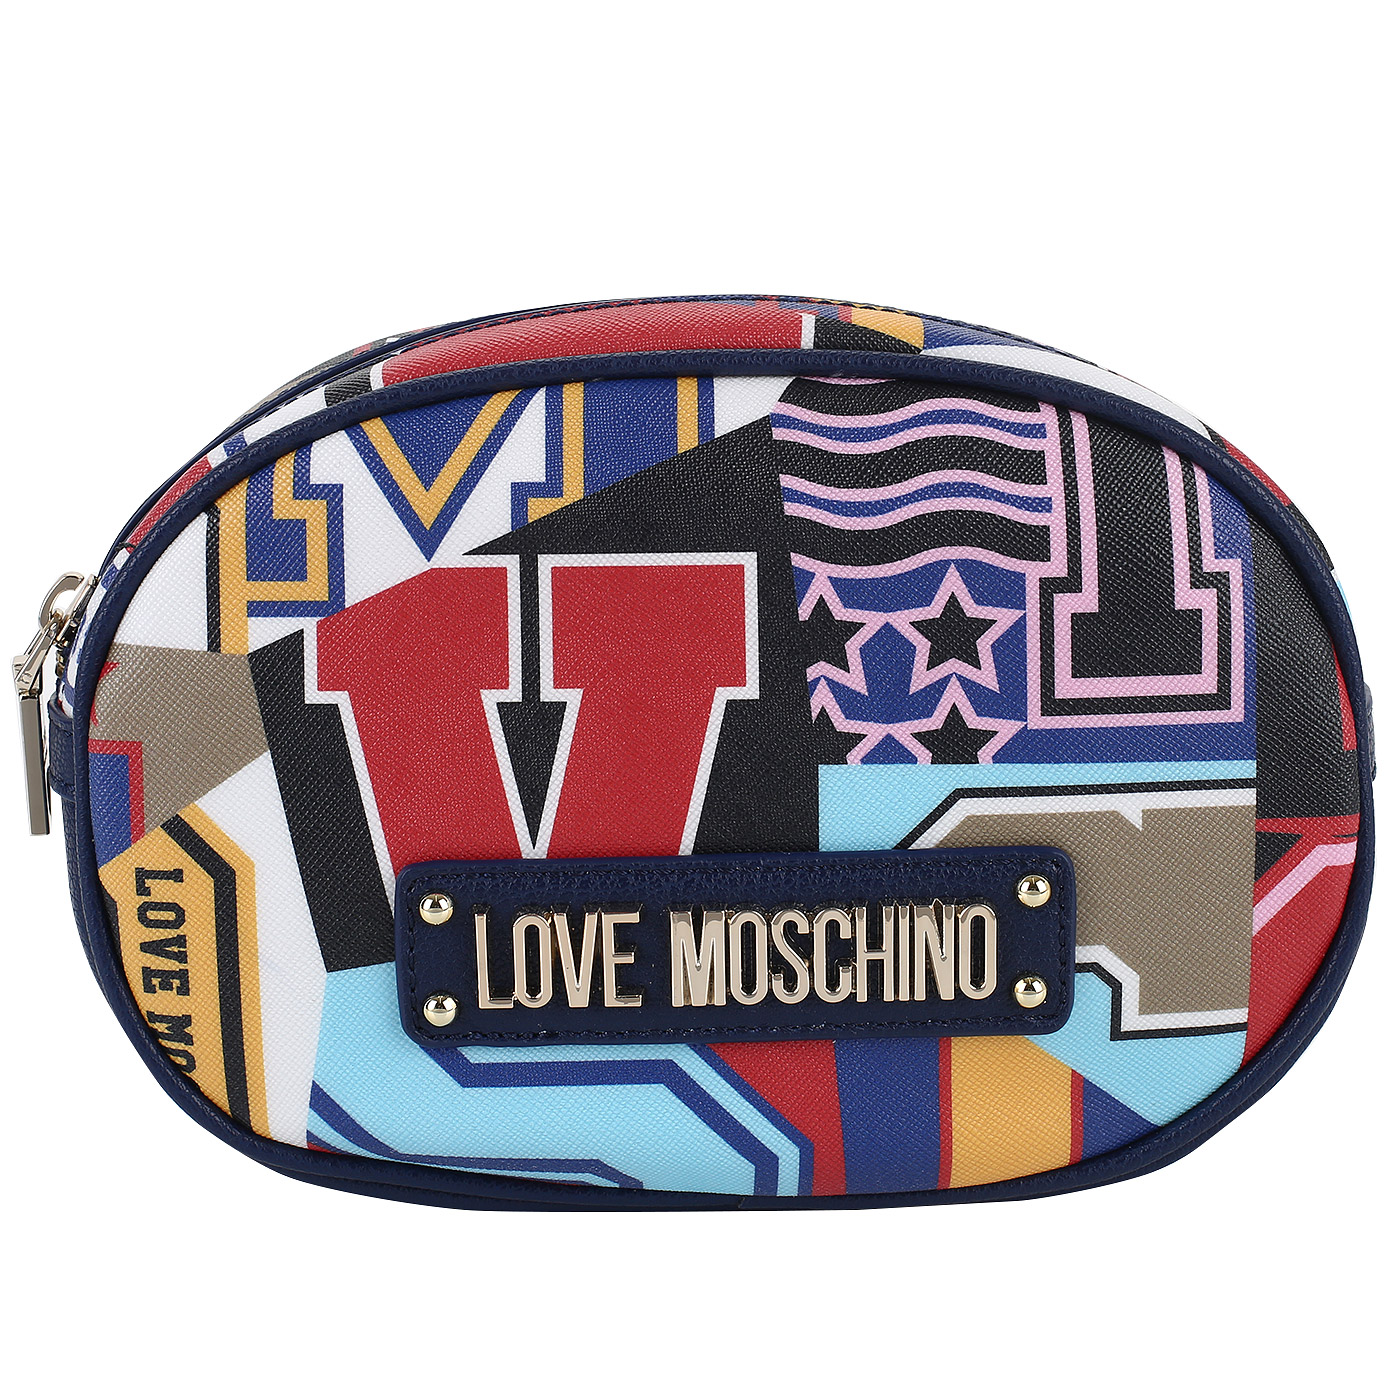 Love Moschino Овальная поясная сумочка